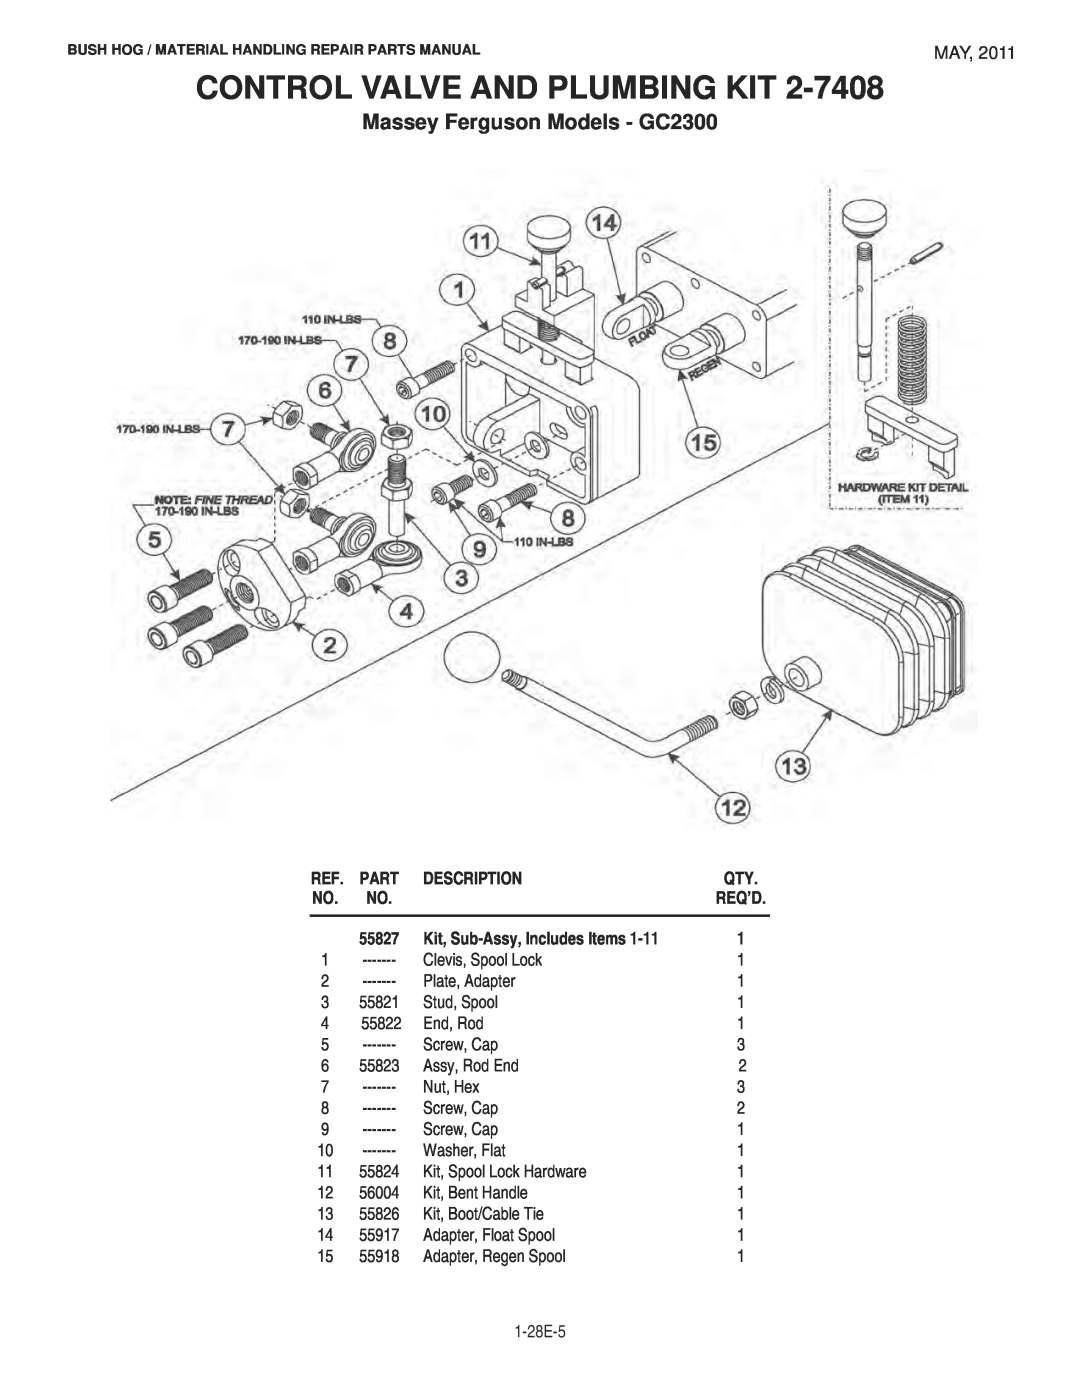 Bush Hog 1747 manual Control Valve And Plumbing Kit, Massey Ferguson Models - GC2300, Description 